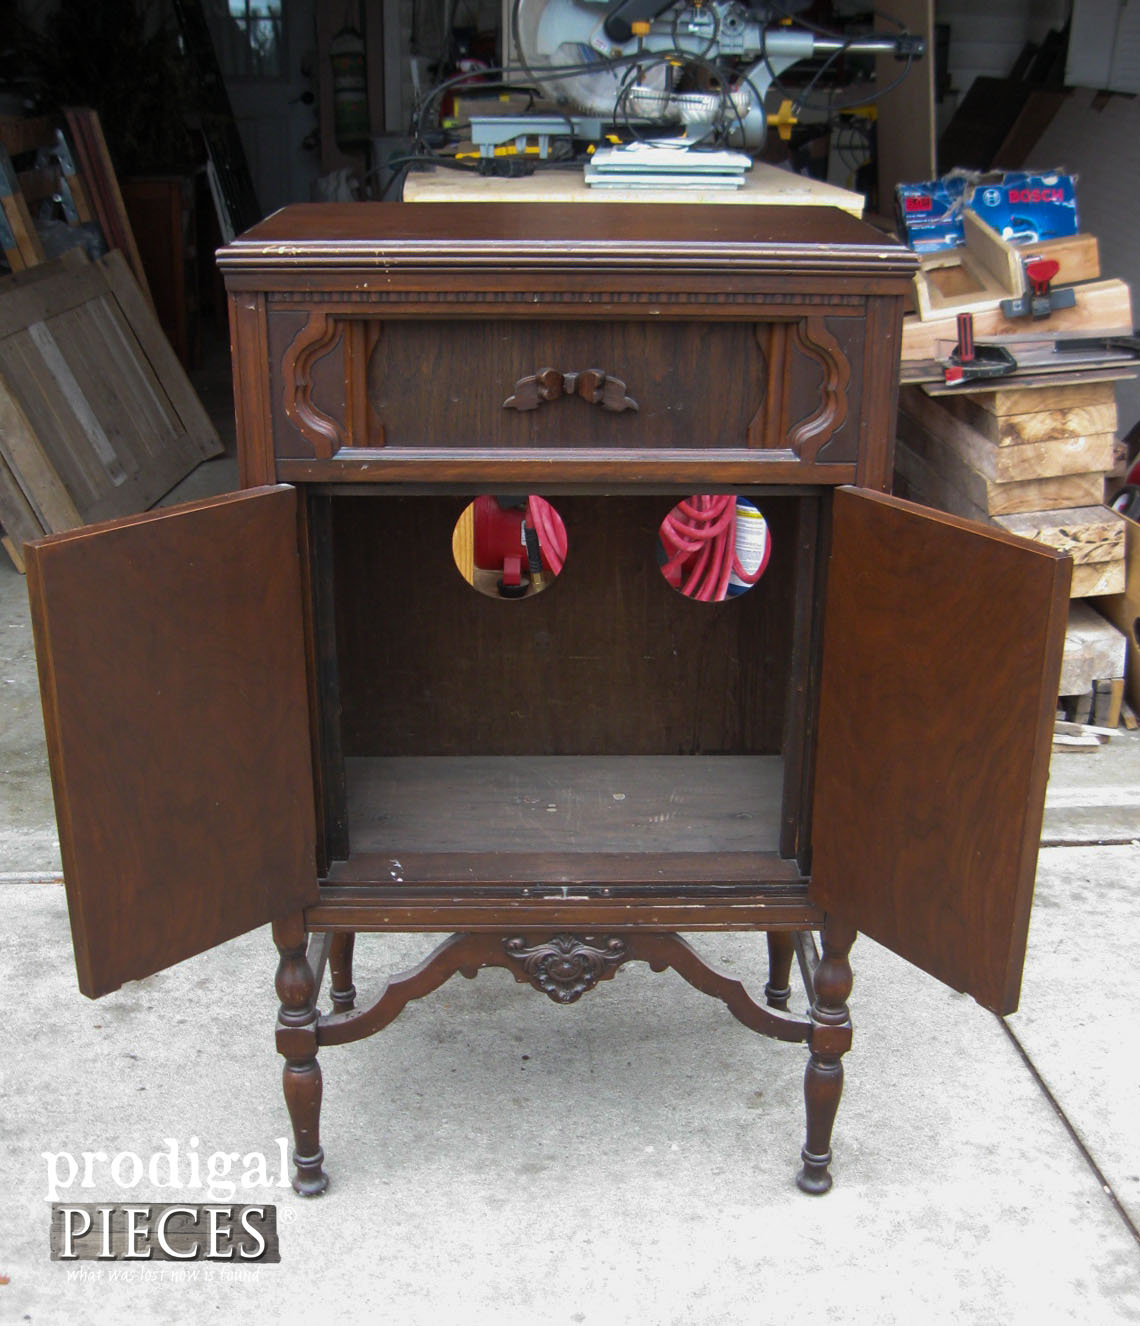 Inside Open Antique Radio Cabinet | Prodigal Pieces | www.prodigalpieces.com